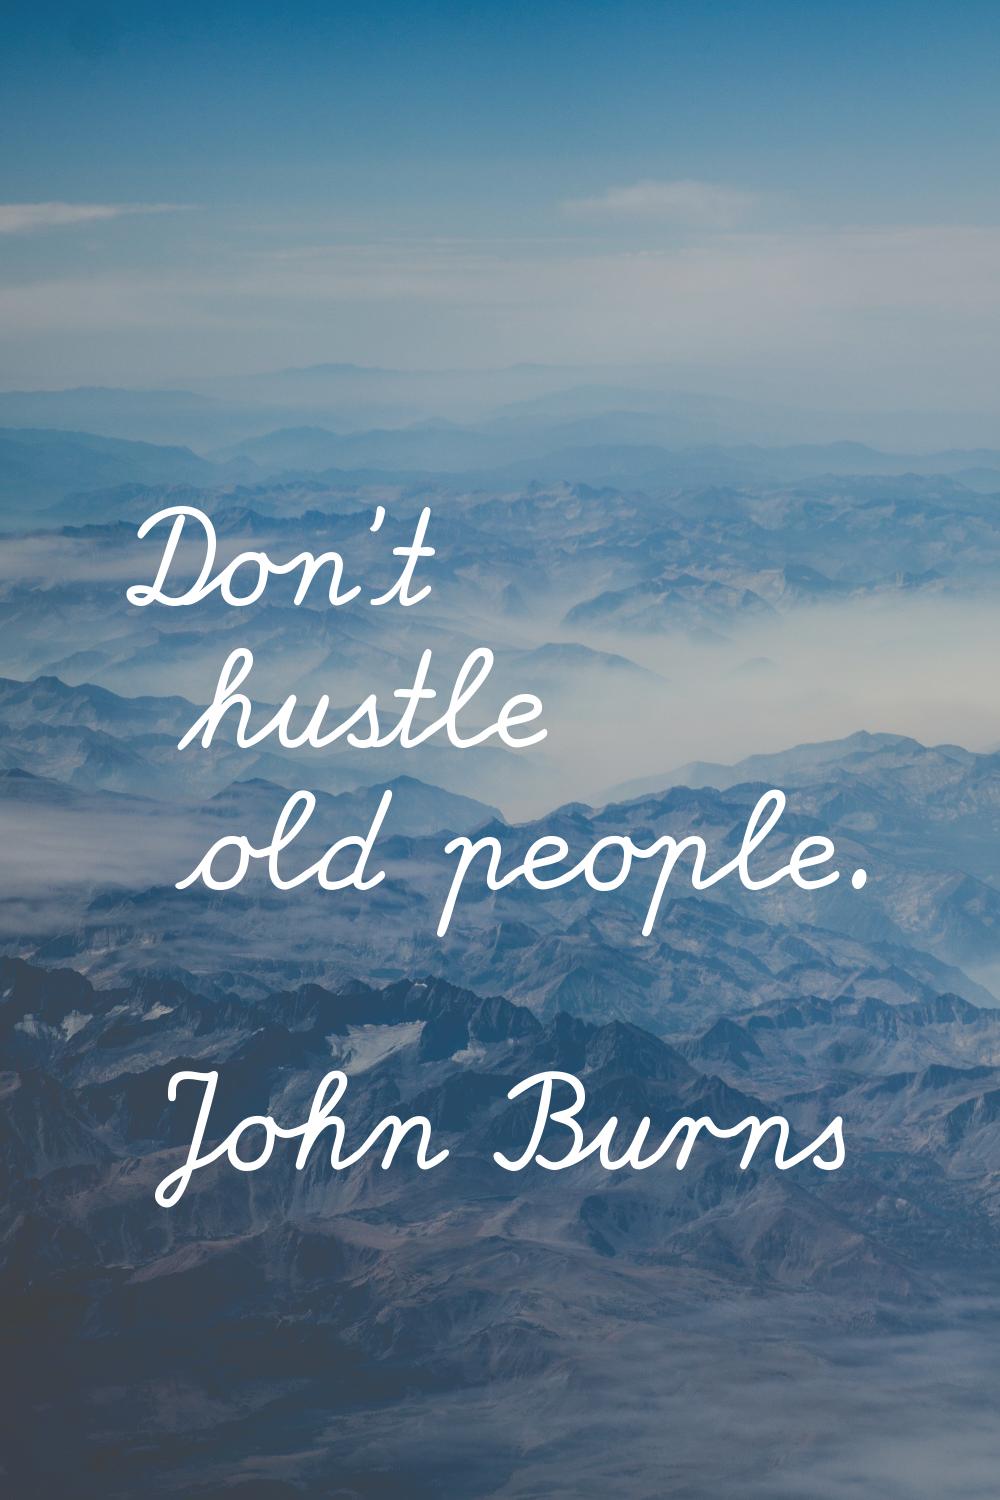 Don't hustle old people.